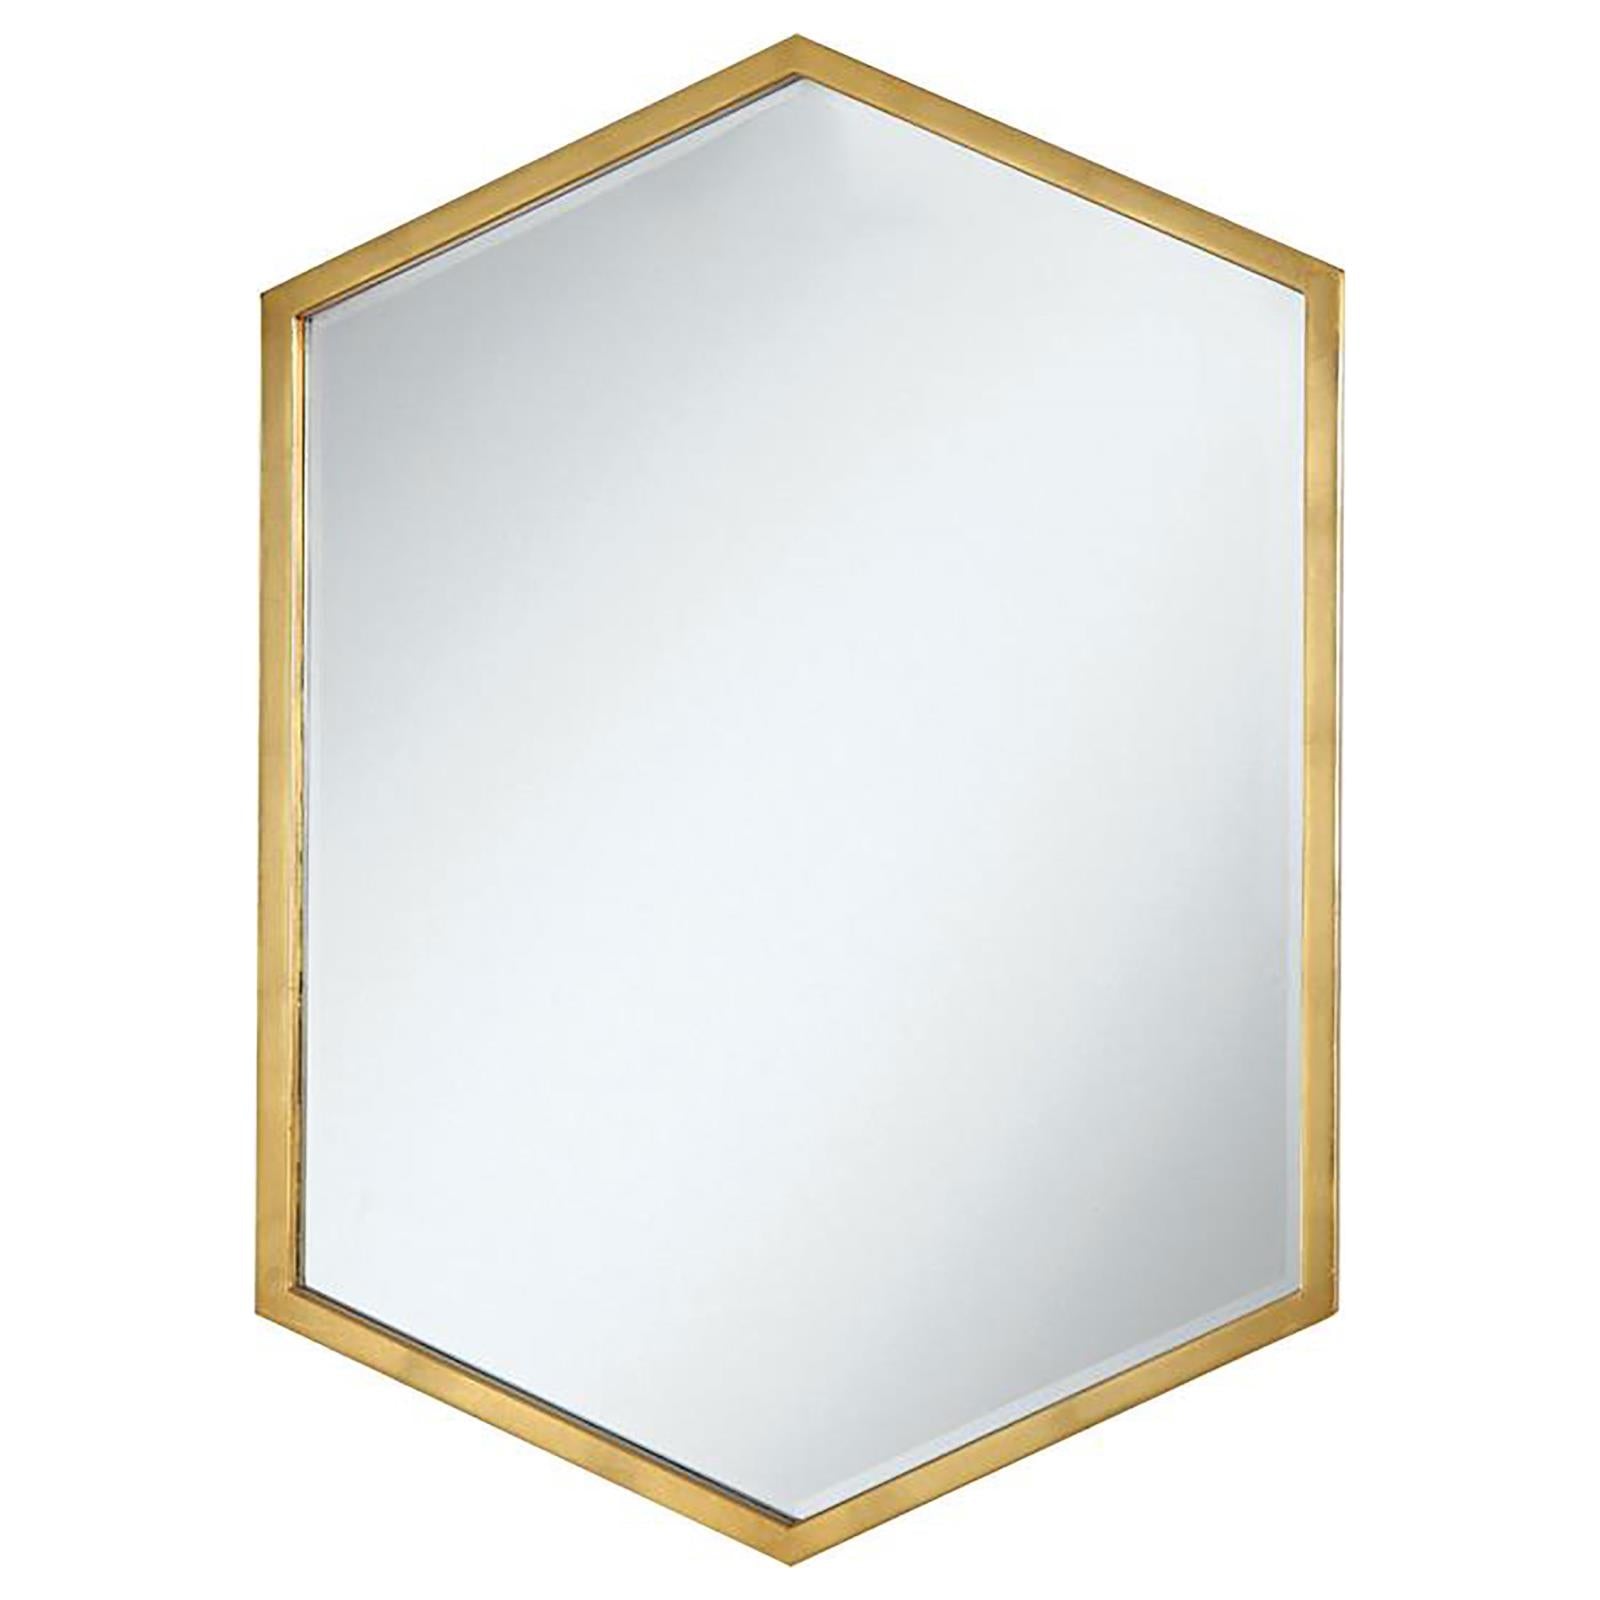 Unique Hexagon Shaped Mirror image